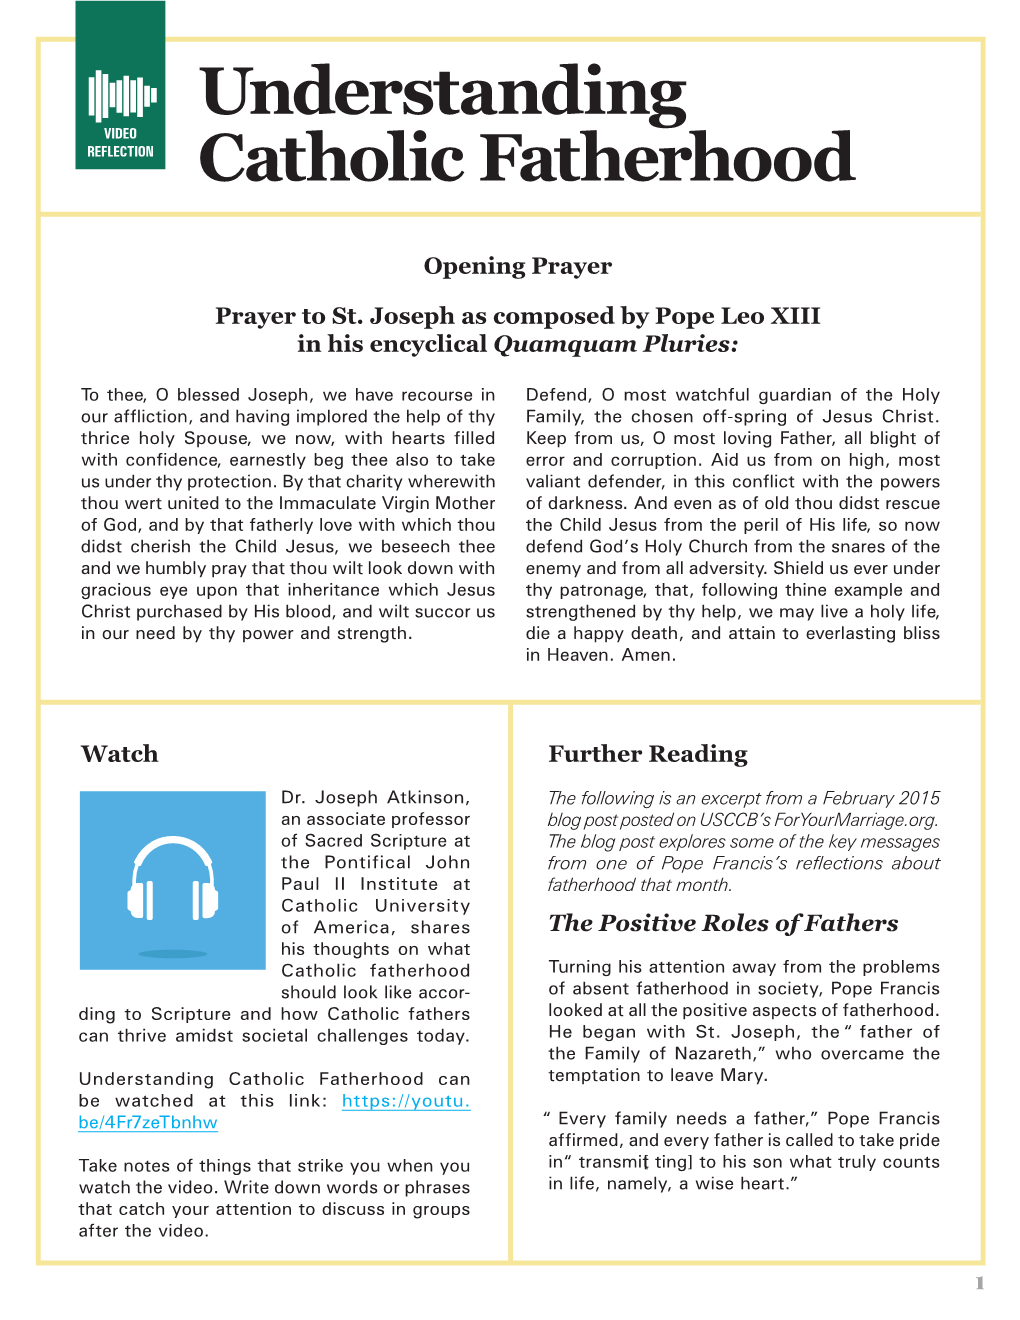 Understanding Catholic Fatherhood